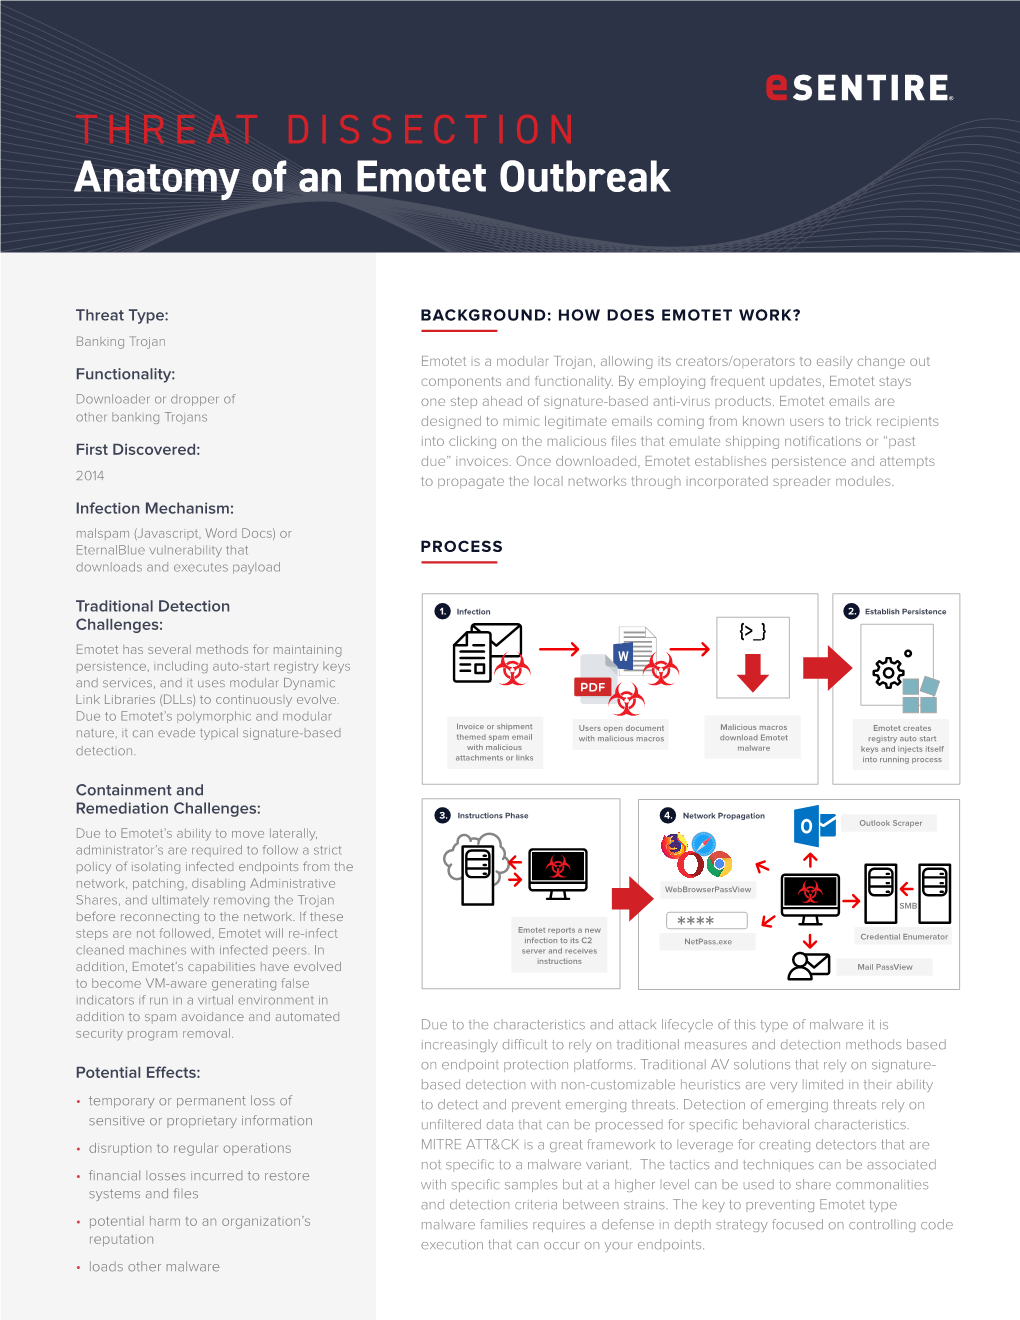 Anatomy of an Emotet Outbreak